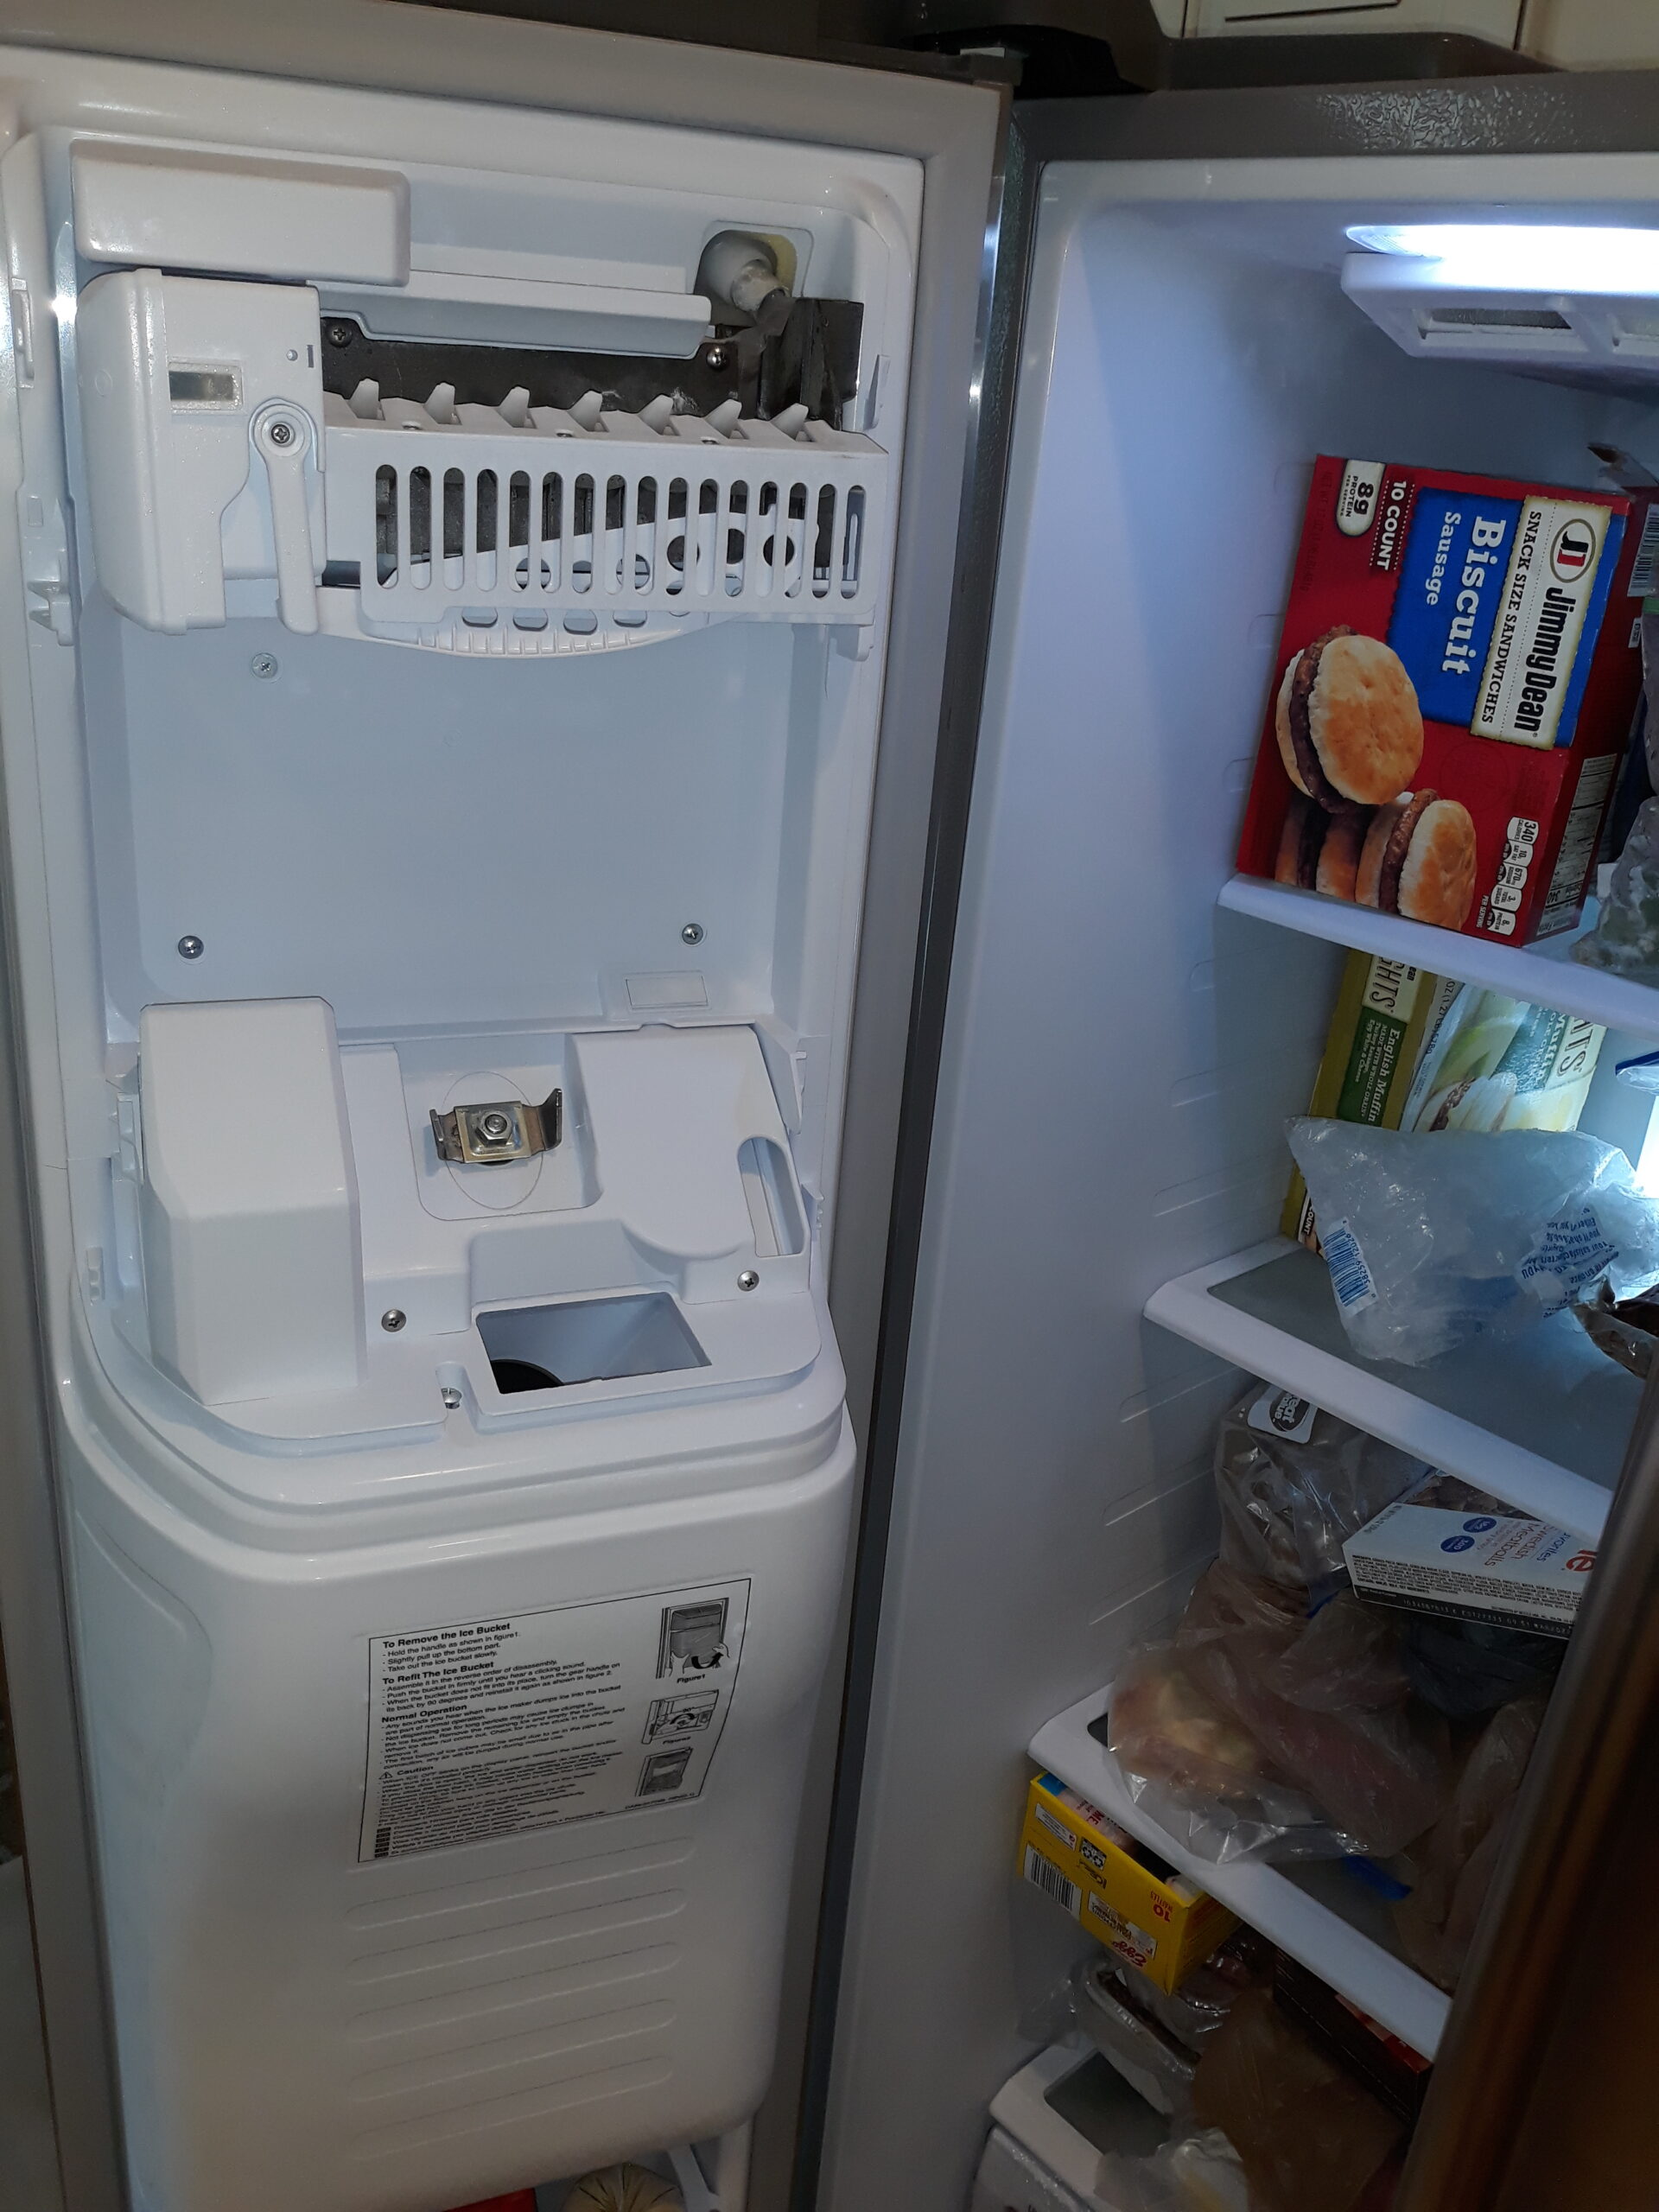 appliance repair refrigerator repair samsung ice maker not dispensing ice hull st oakland fl 34760